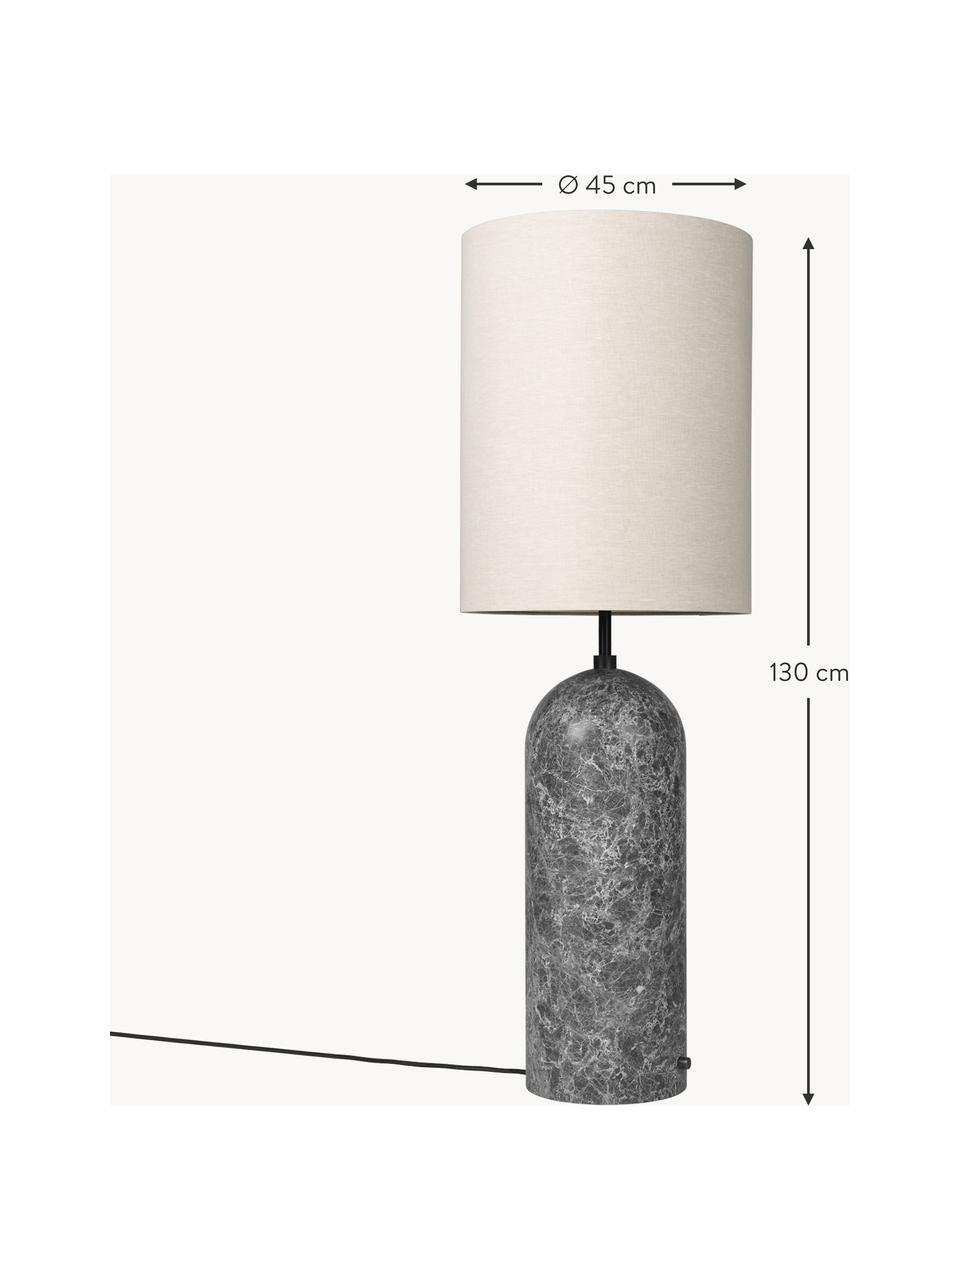 Lámpara de pie pequeña regulable con base de mármol Gravity, Pantalla: tela, Cable: plástico, Beige claro, gris oscuro veteado, Al 130 cm